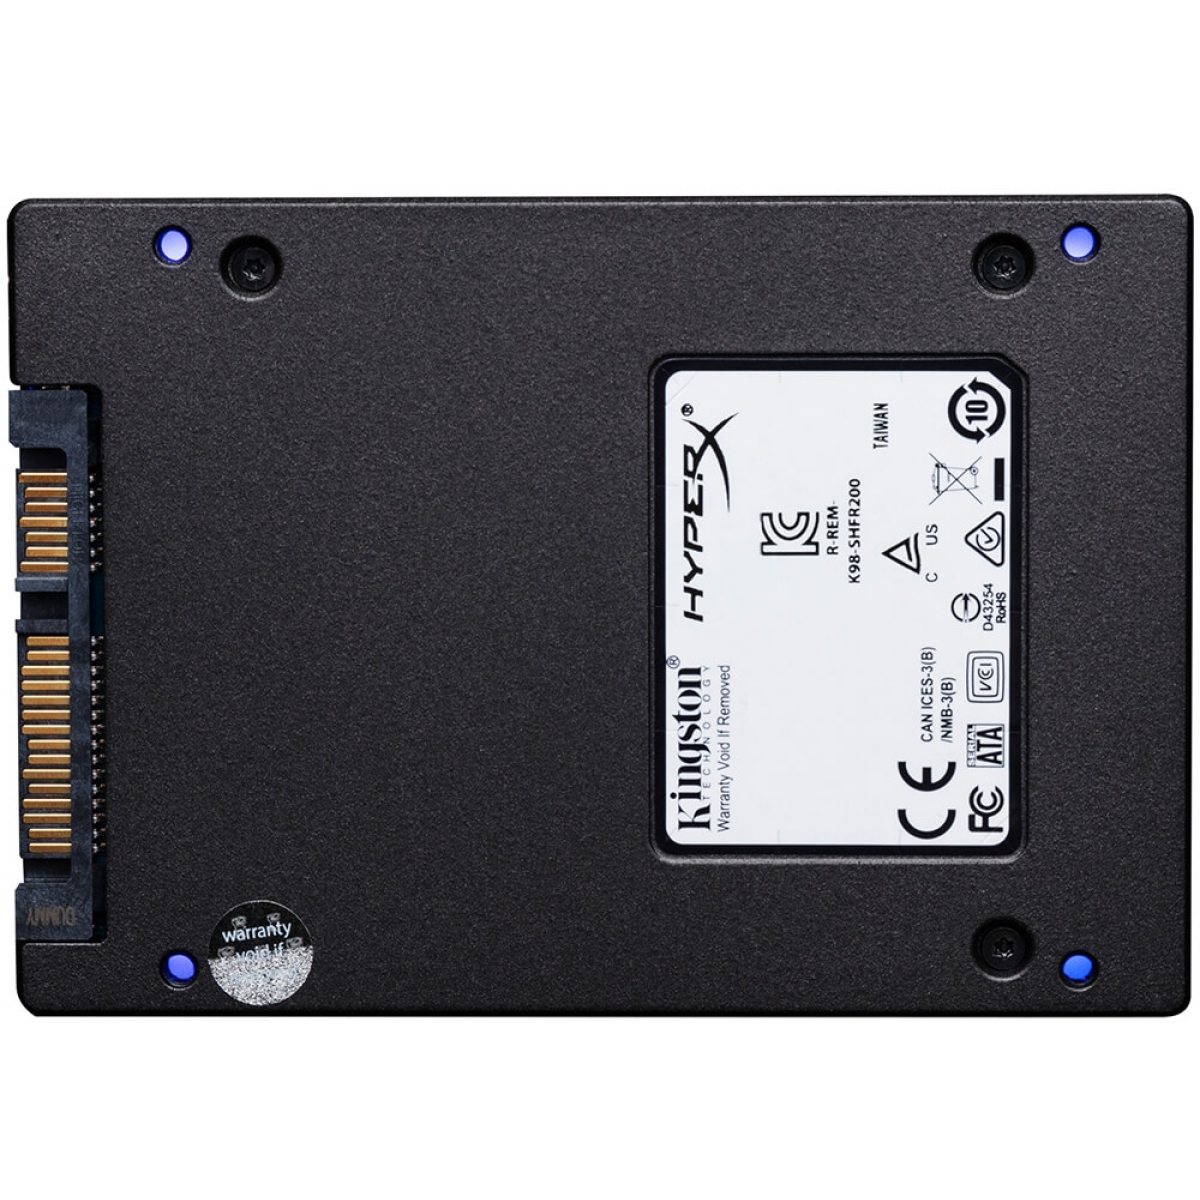 SSD Kingston Hyperx Fury RGB, 240GB, Sata III, Leitura 550MBs e Gravação 480MBs, SHFR200-240G